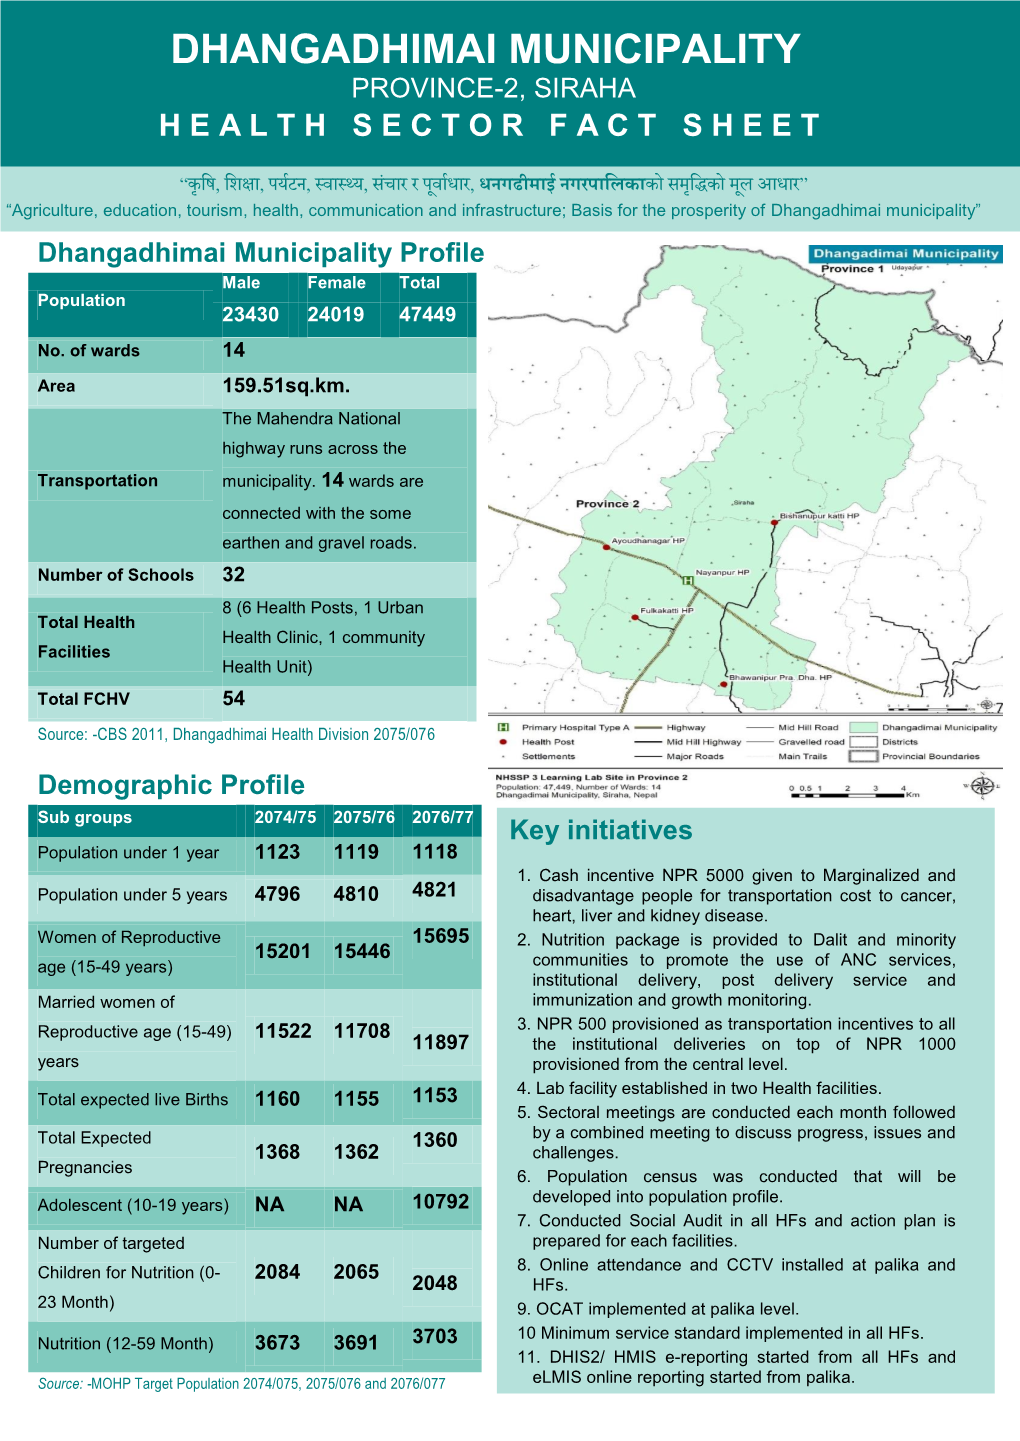 Dhangadhimai Municipality Province-2, Siraha Health Sector Fact Sheet